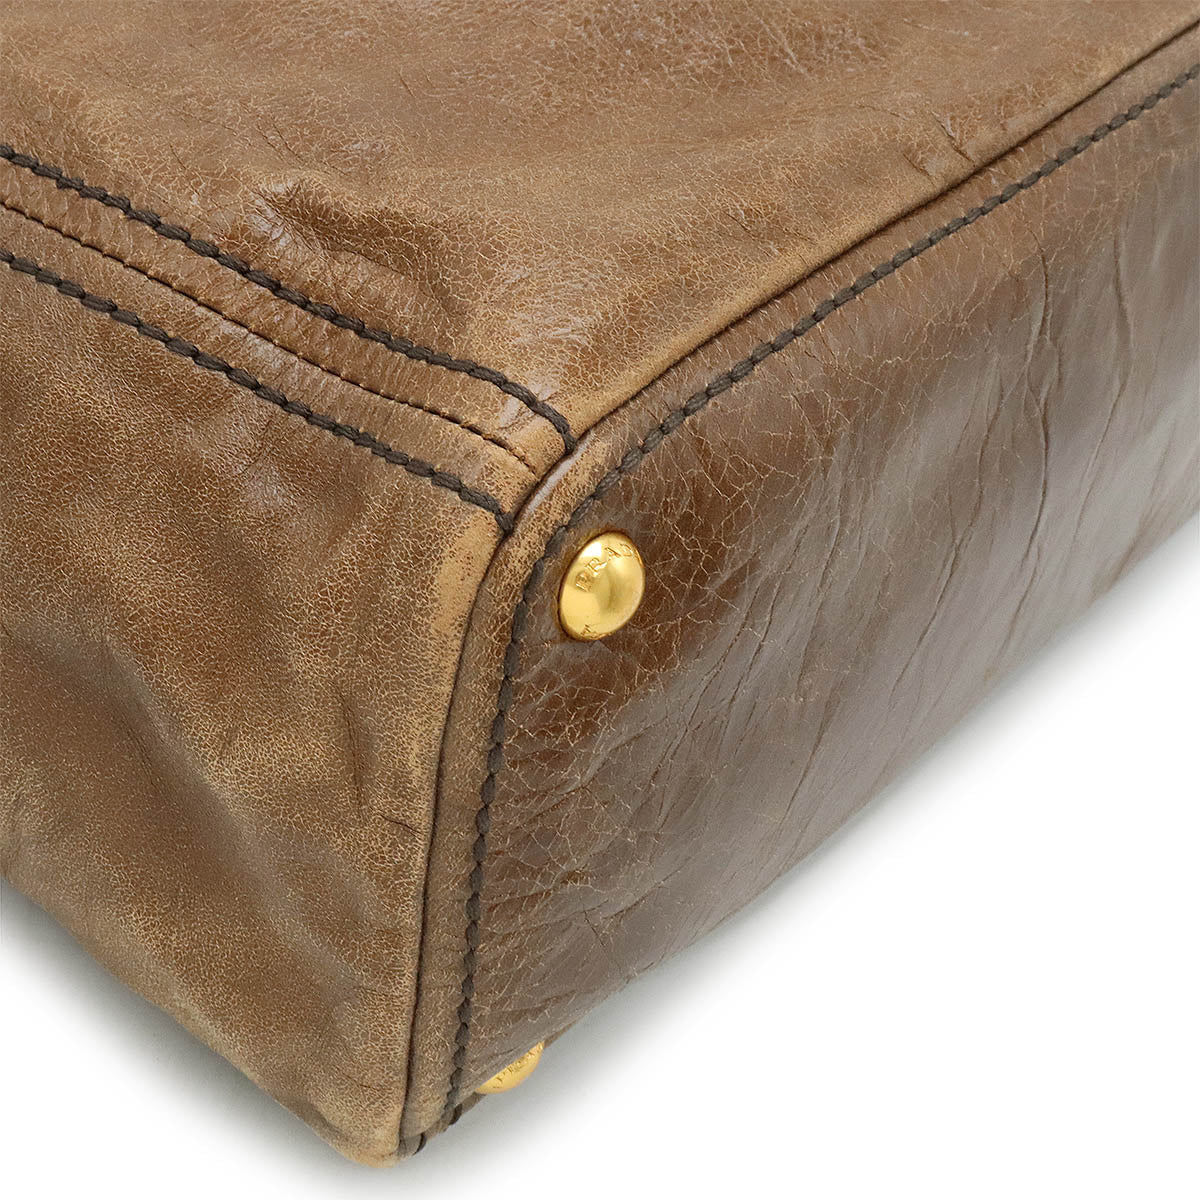 PRADA Vitello Tote Handbag Calfskin Leather Brown